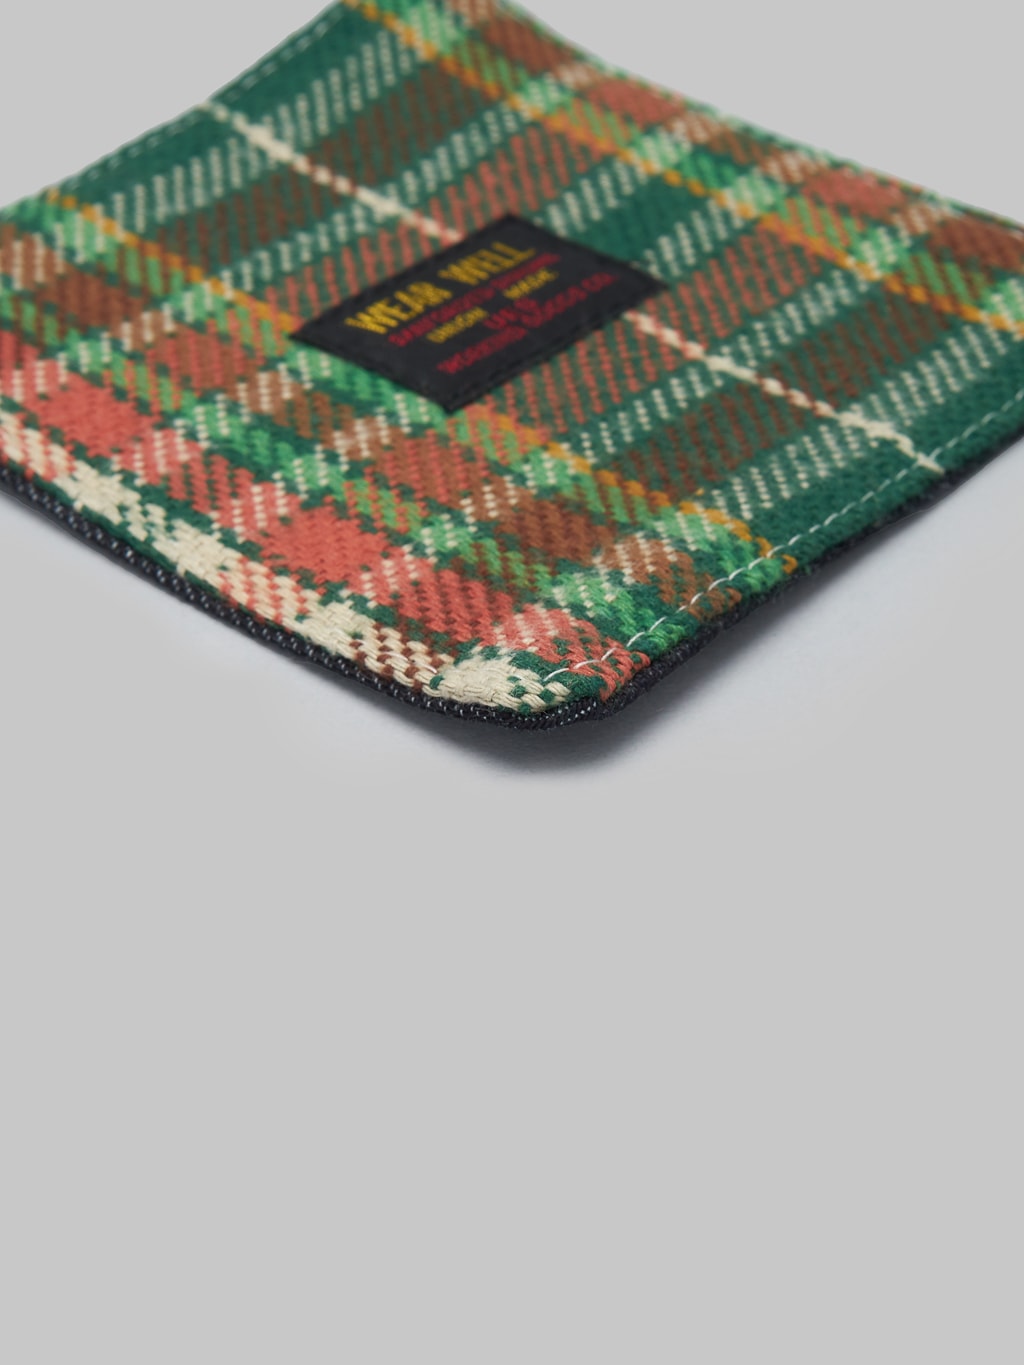 UES Denim BSA Coaster high quality fabric